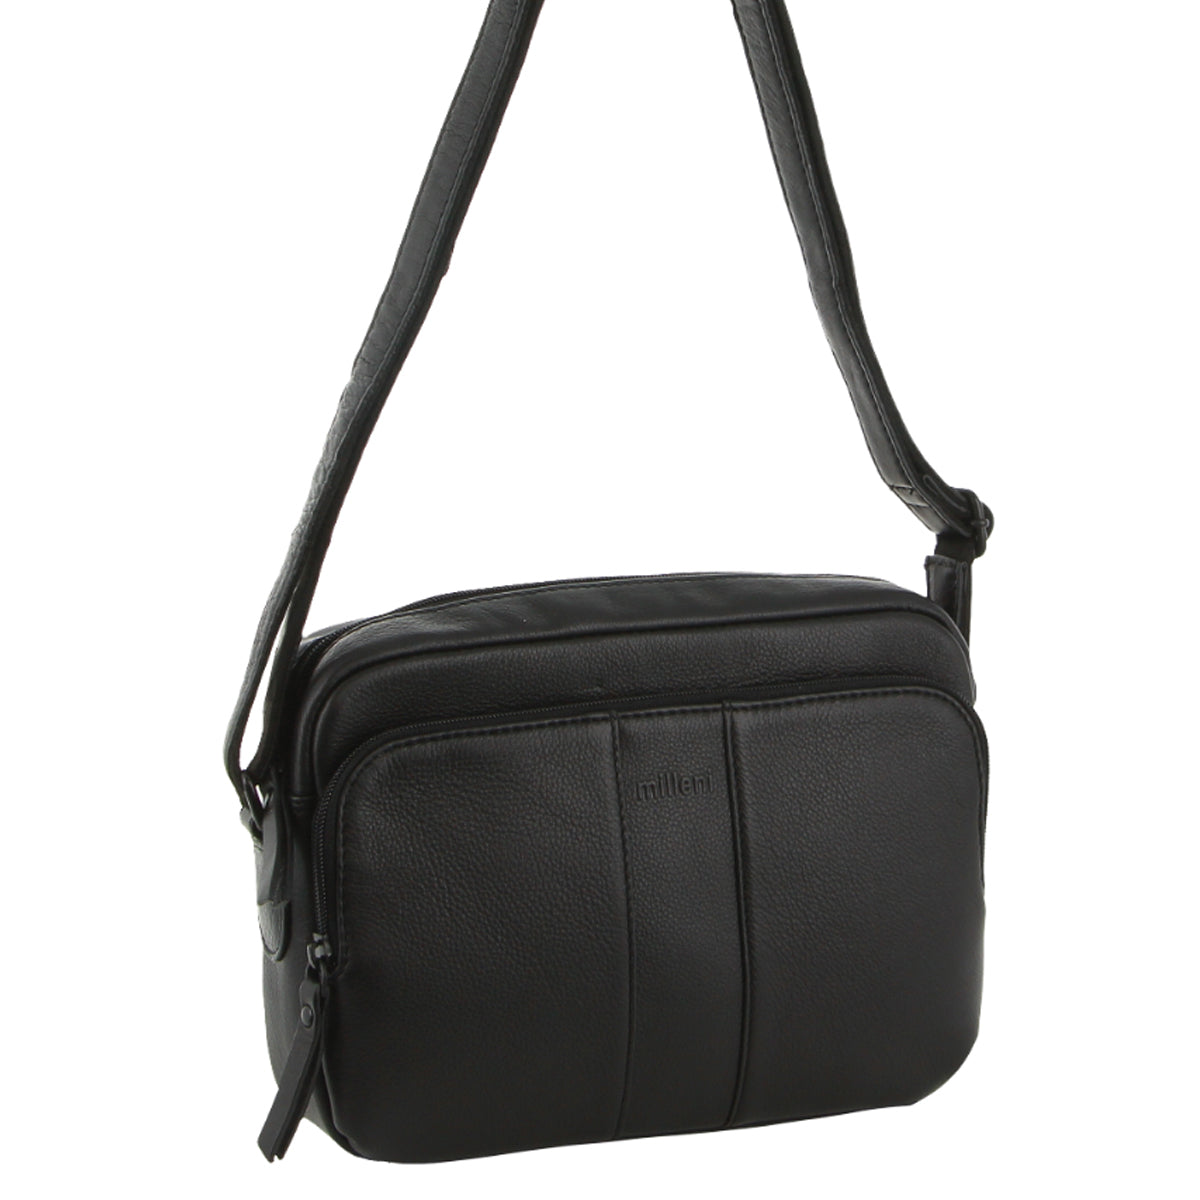 Milleni - NL3871 Small leather sidebag - Black-3